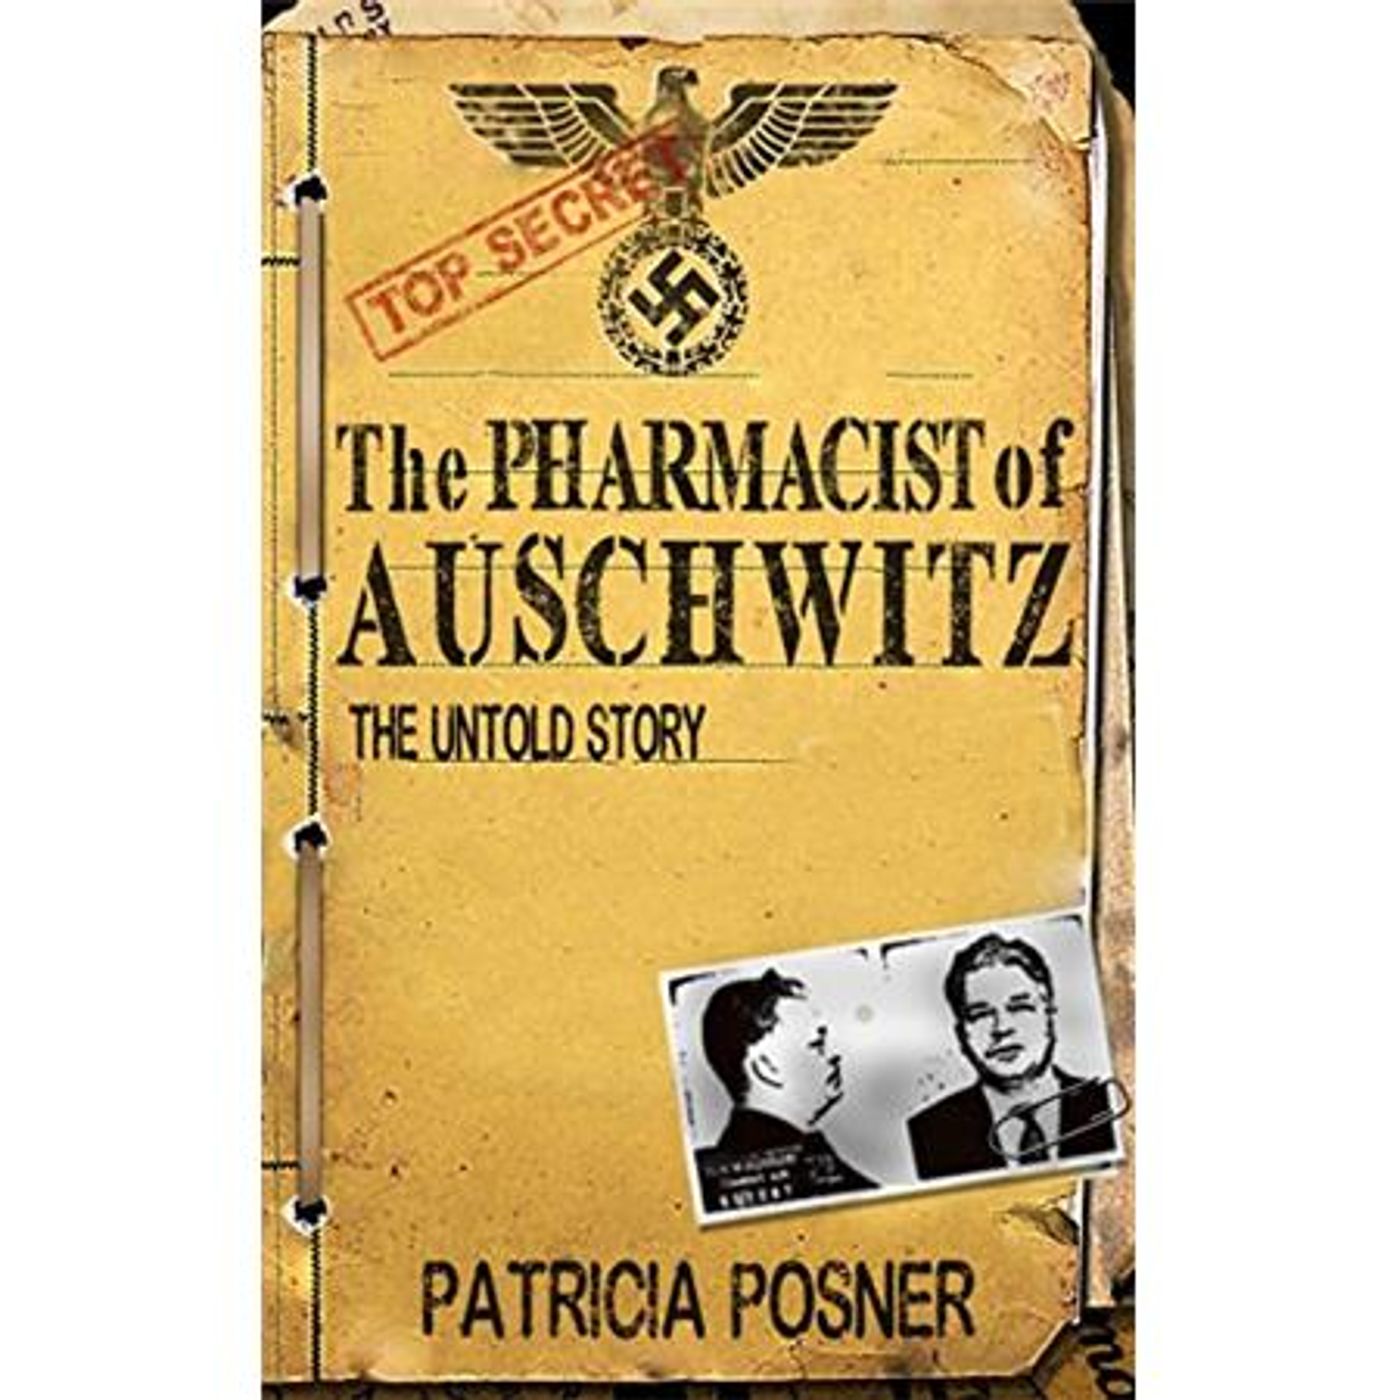 THE PHARMACIST OF AUSCHWITZ-Patricia Posner